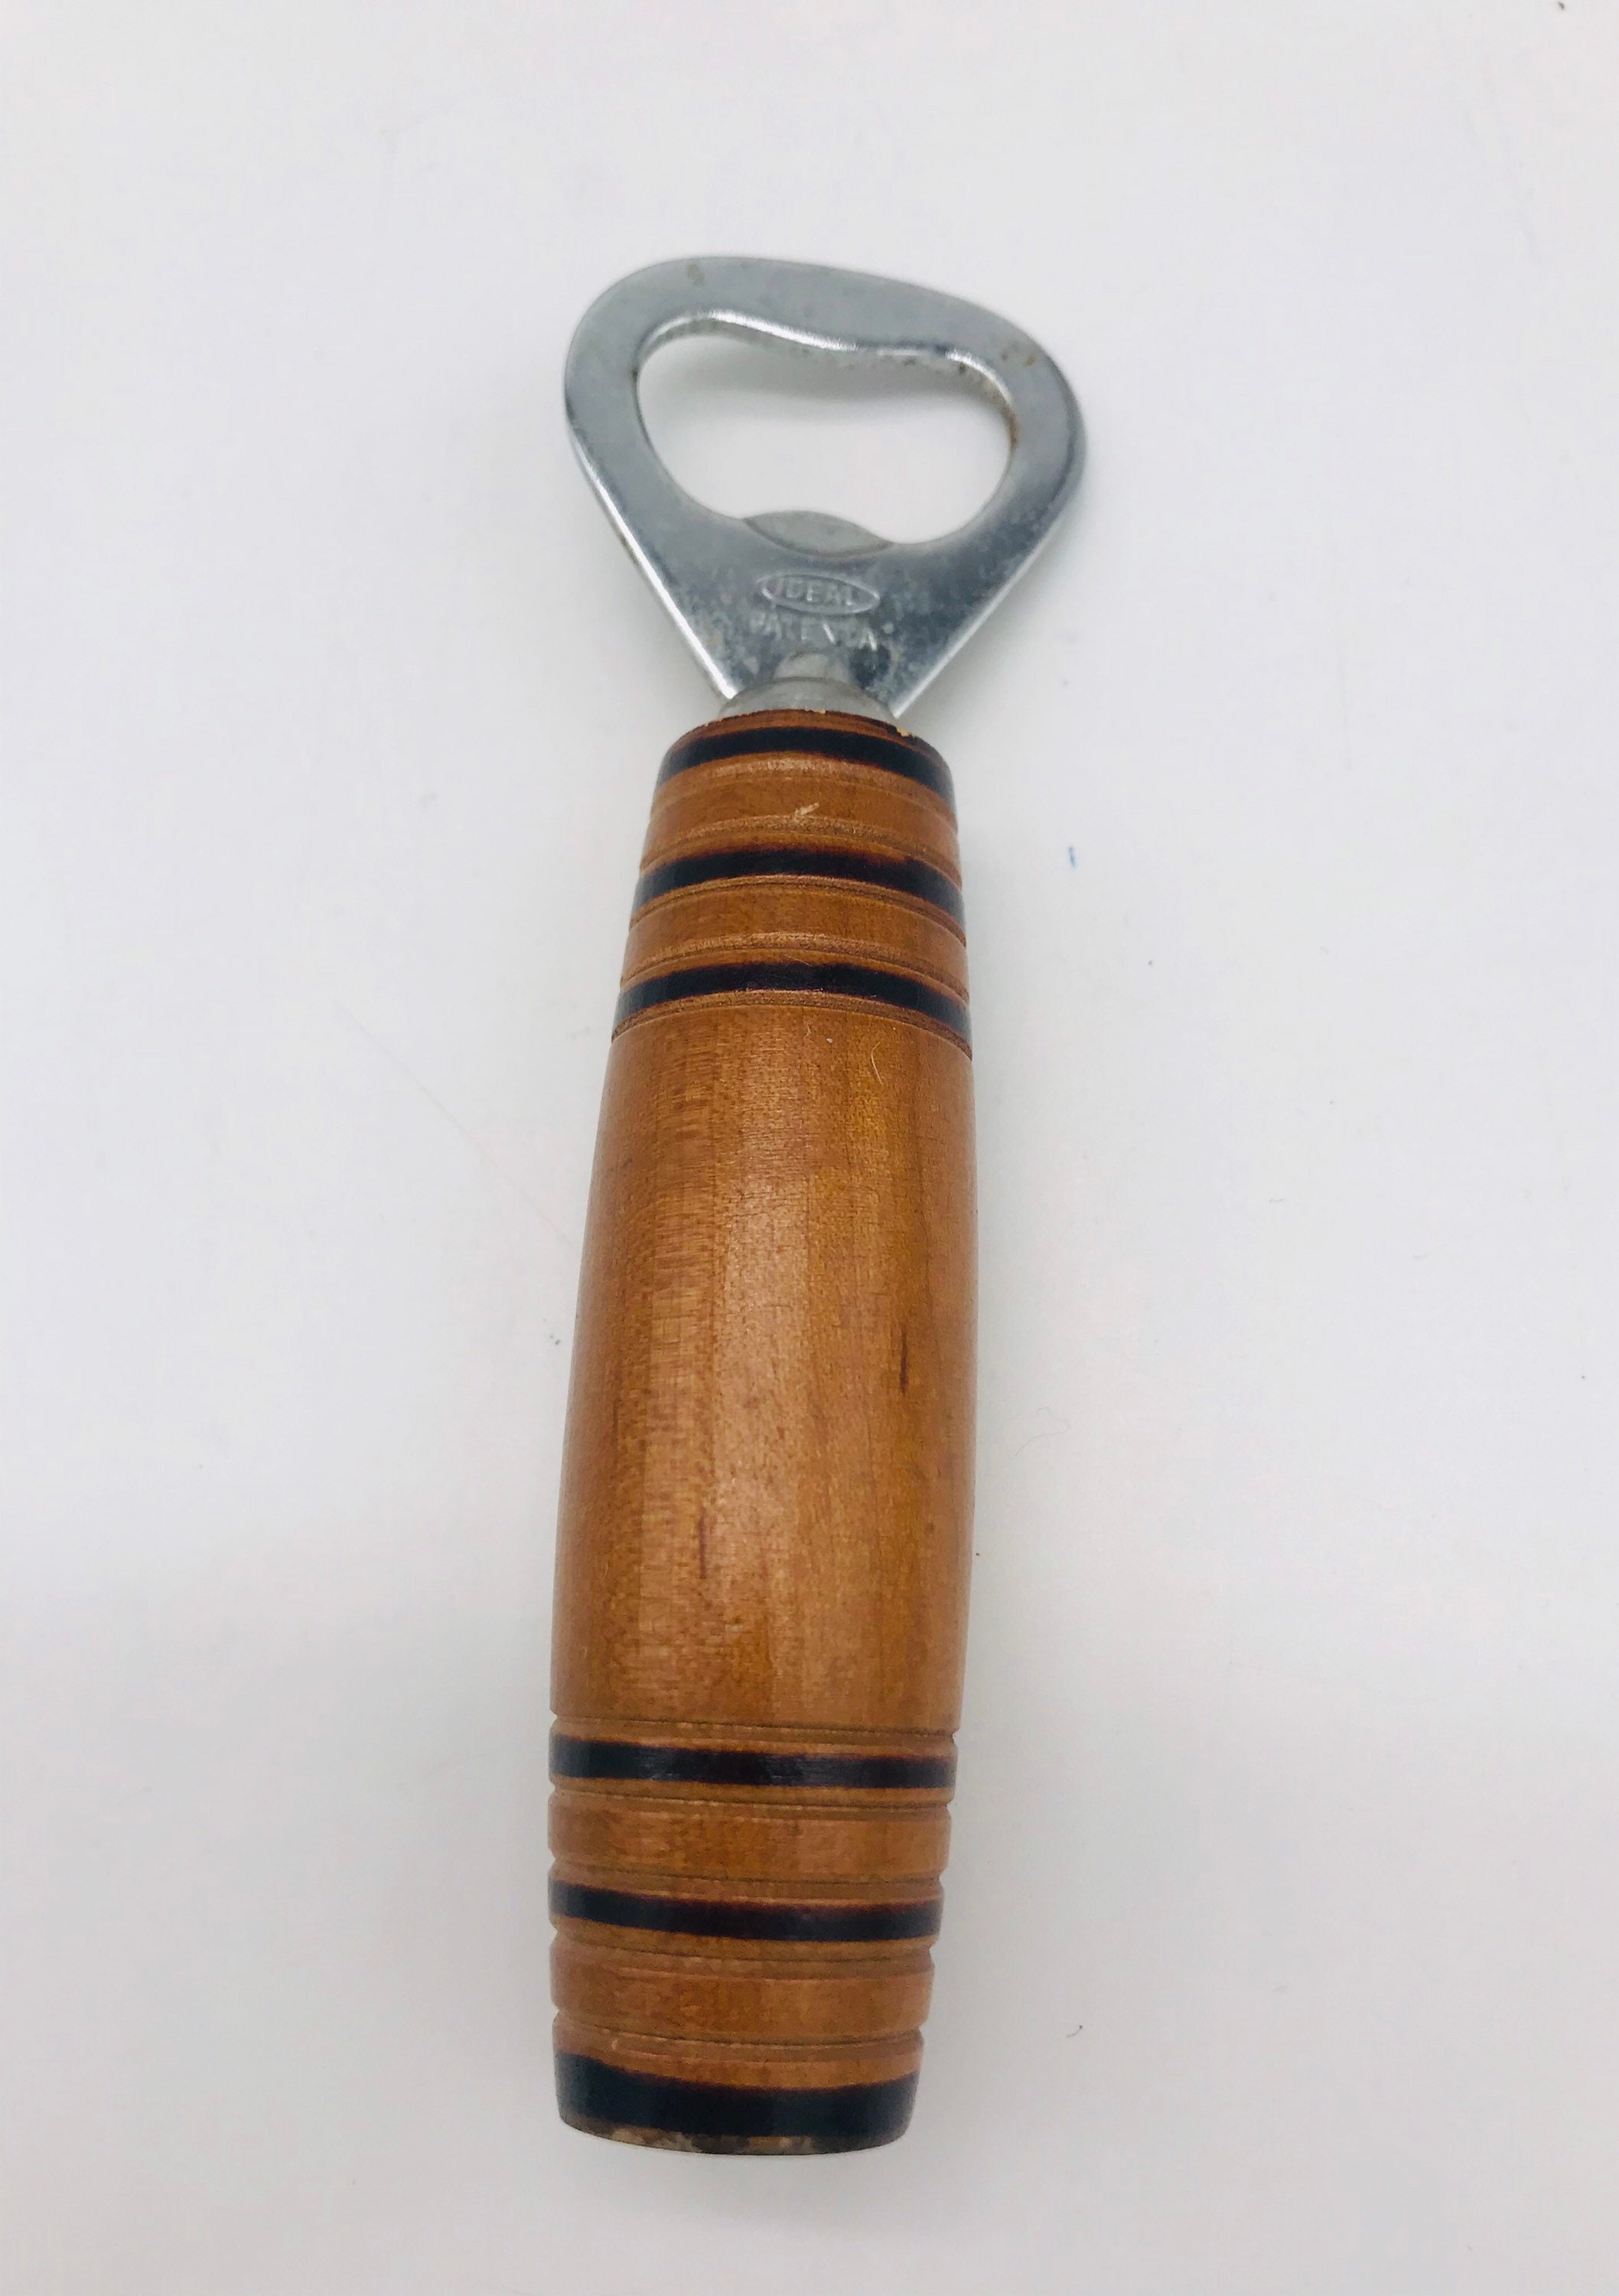 Top Popper Mini Bottle Opener - White Oak - Wood From The Hood